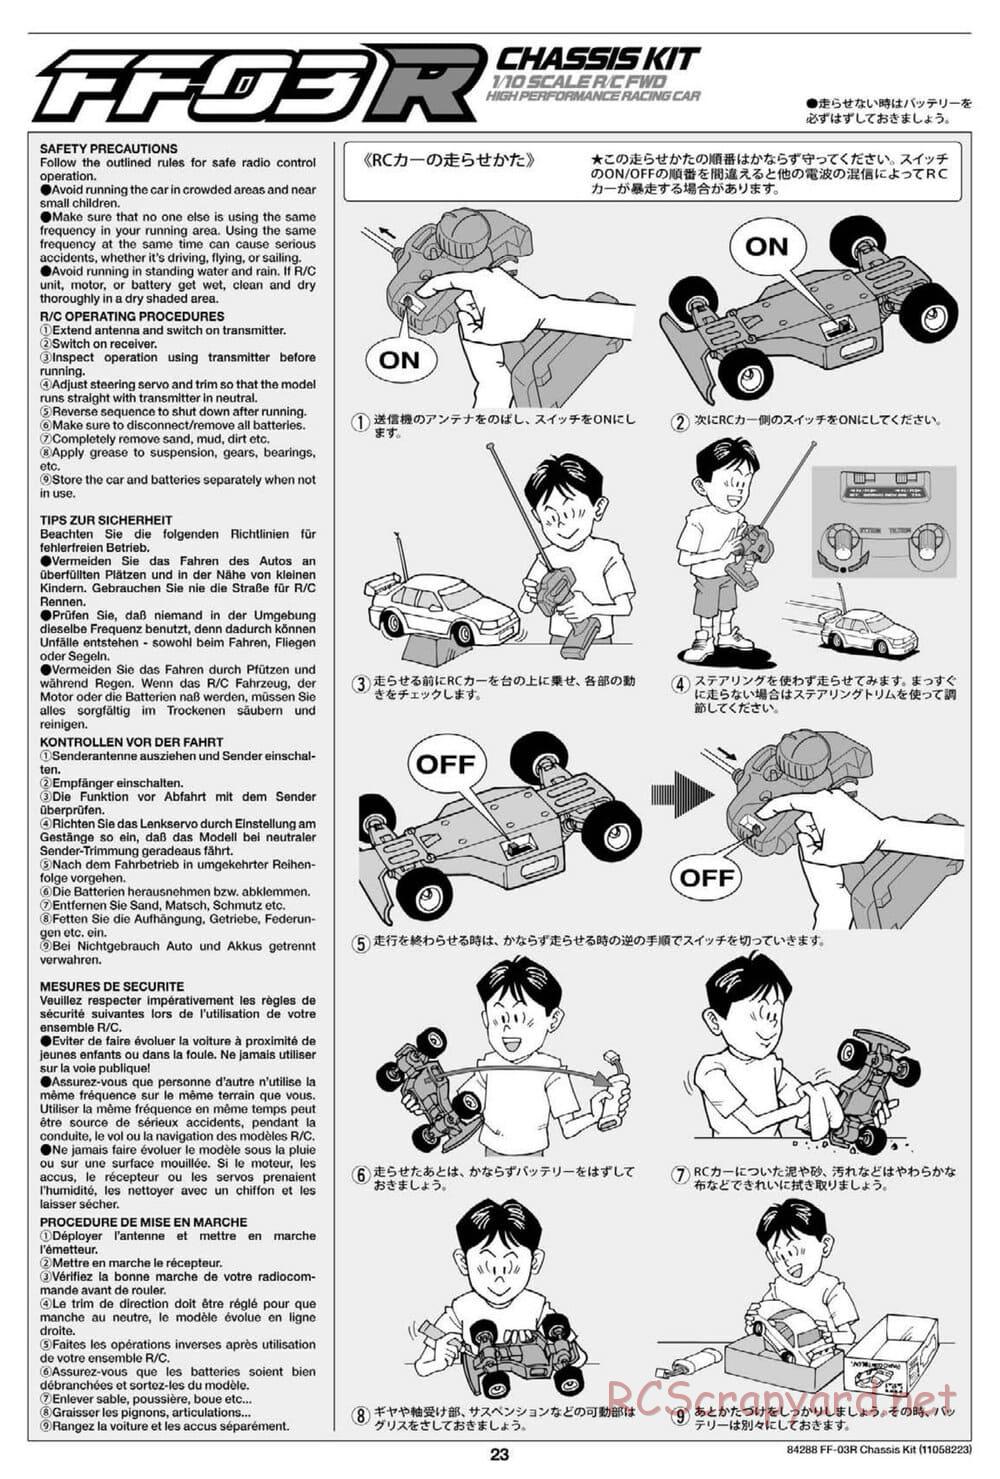 Tamiya - FF-03R Chassis - Manual - Page 25